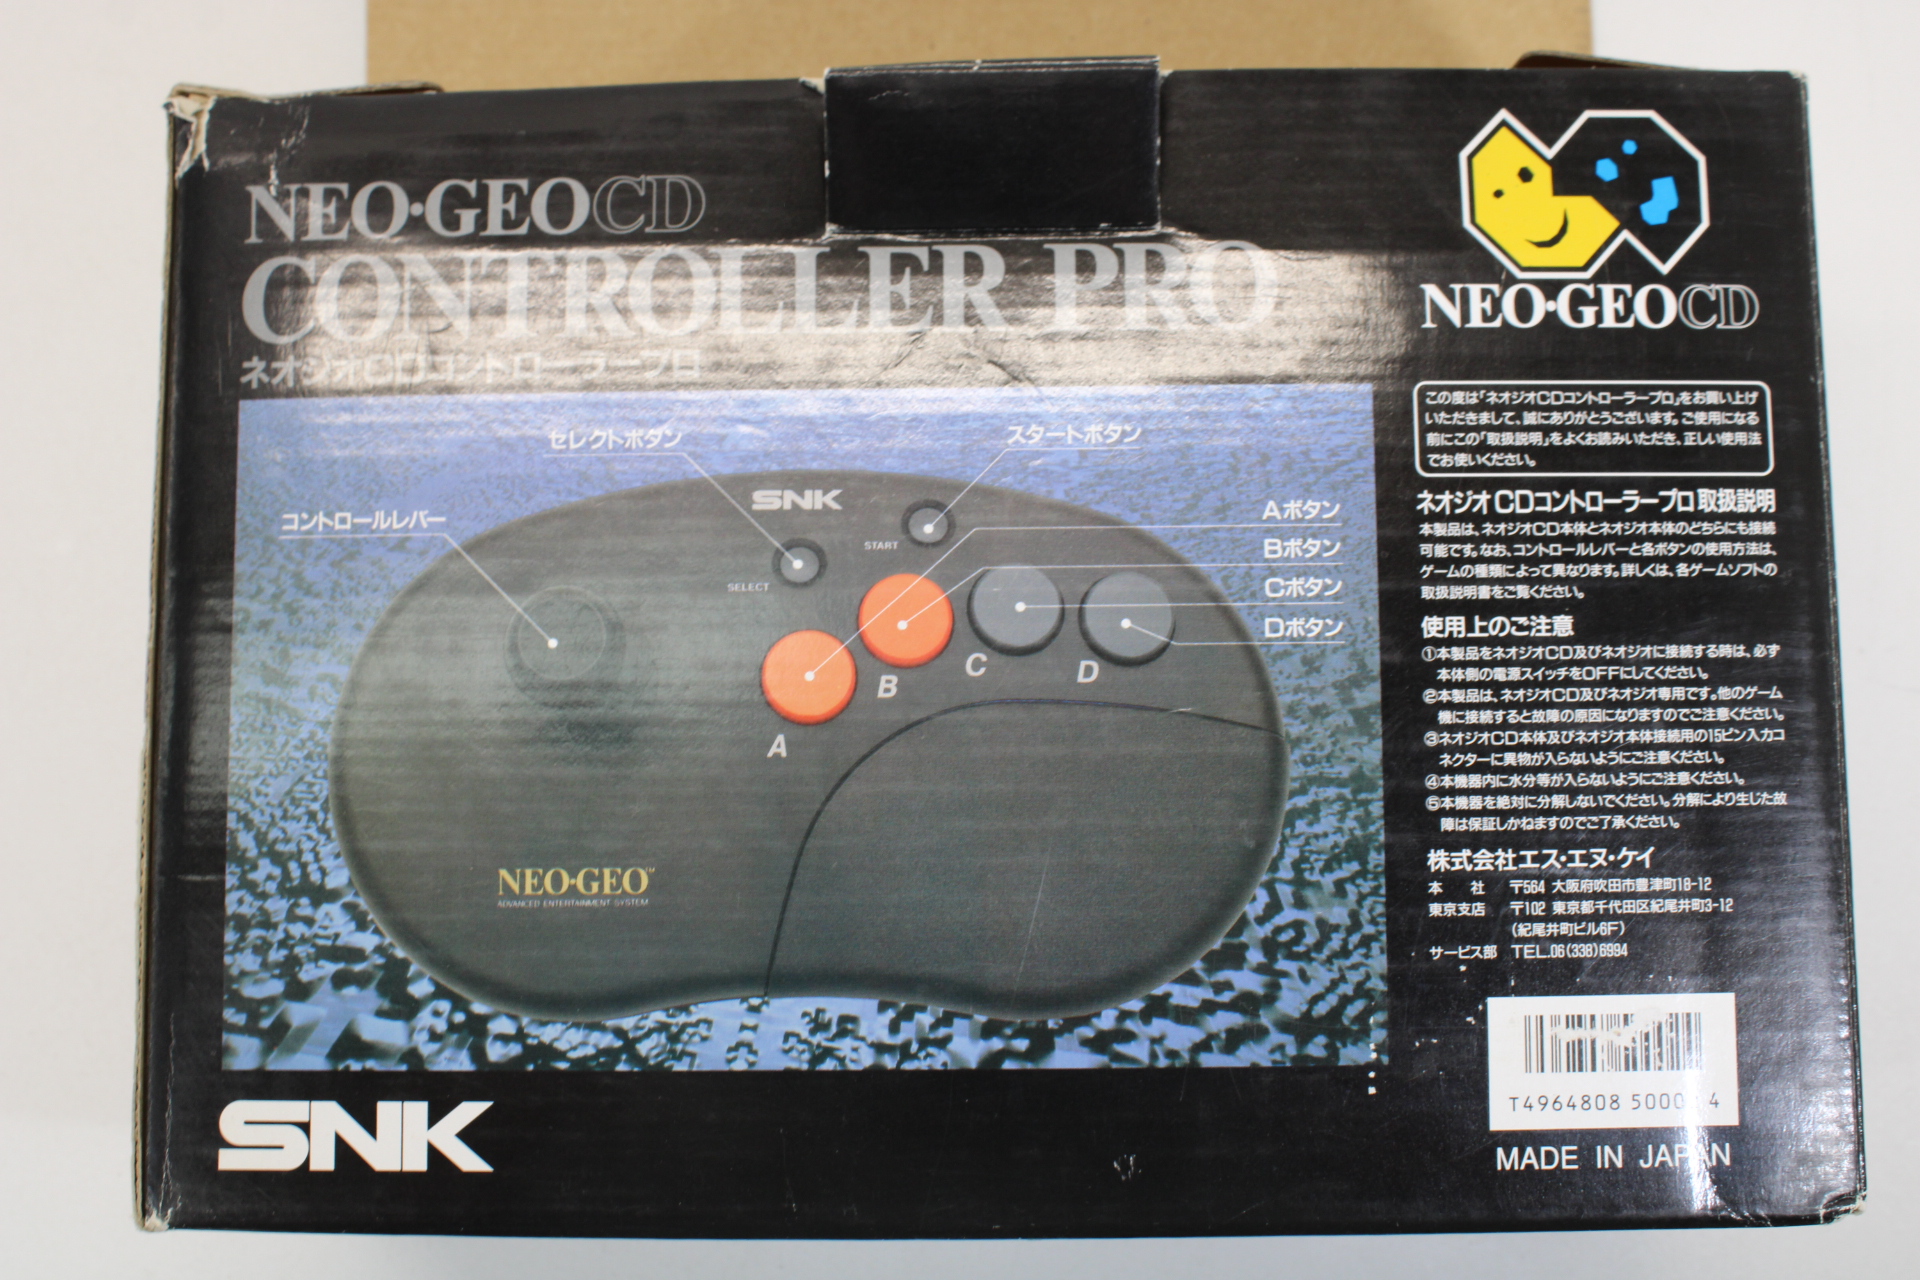 Neo Geo Joystick Controller PRO Arcade Stick Boxed (B) – Retro Games Japan